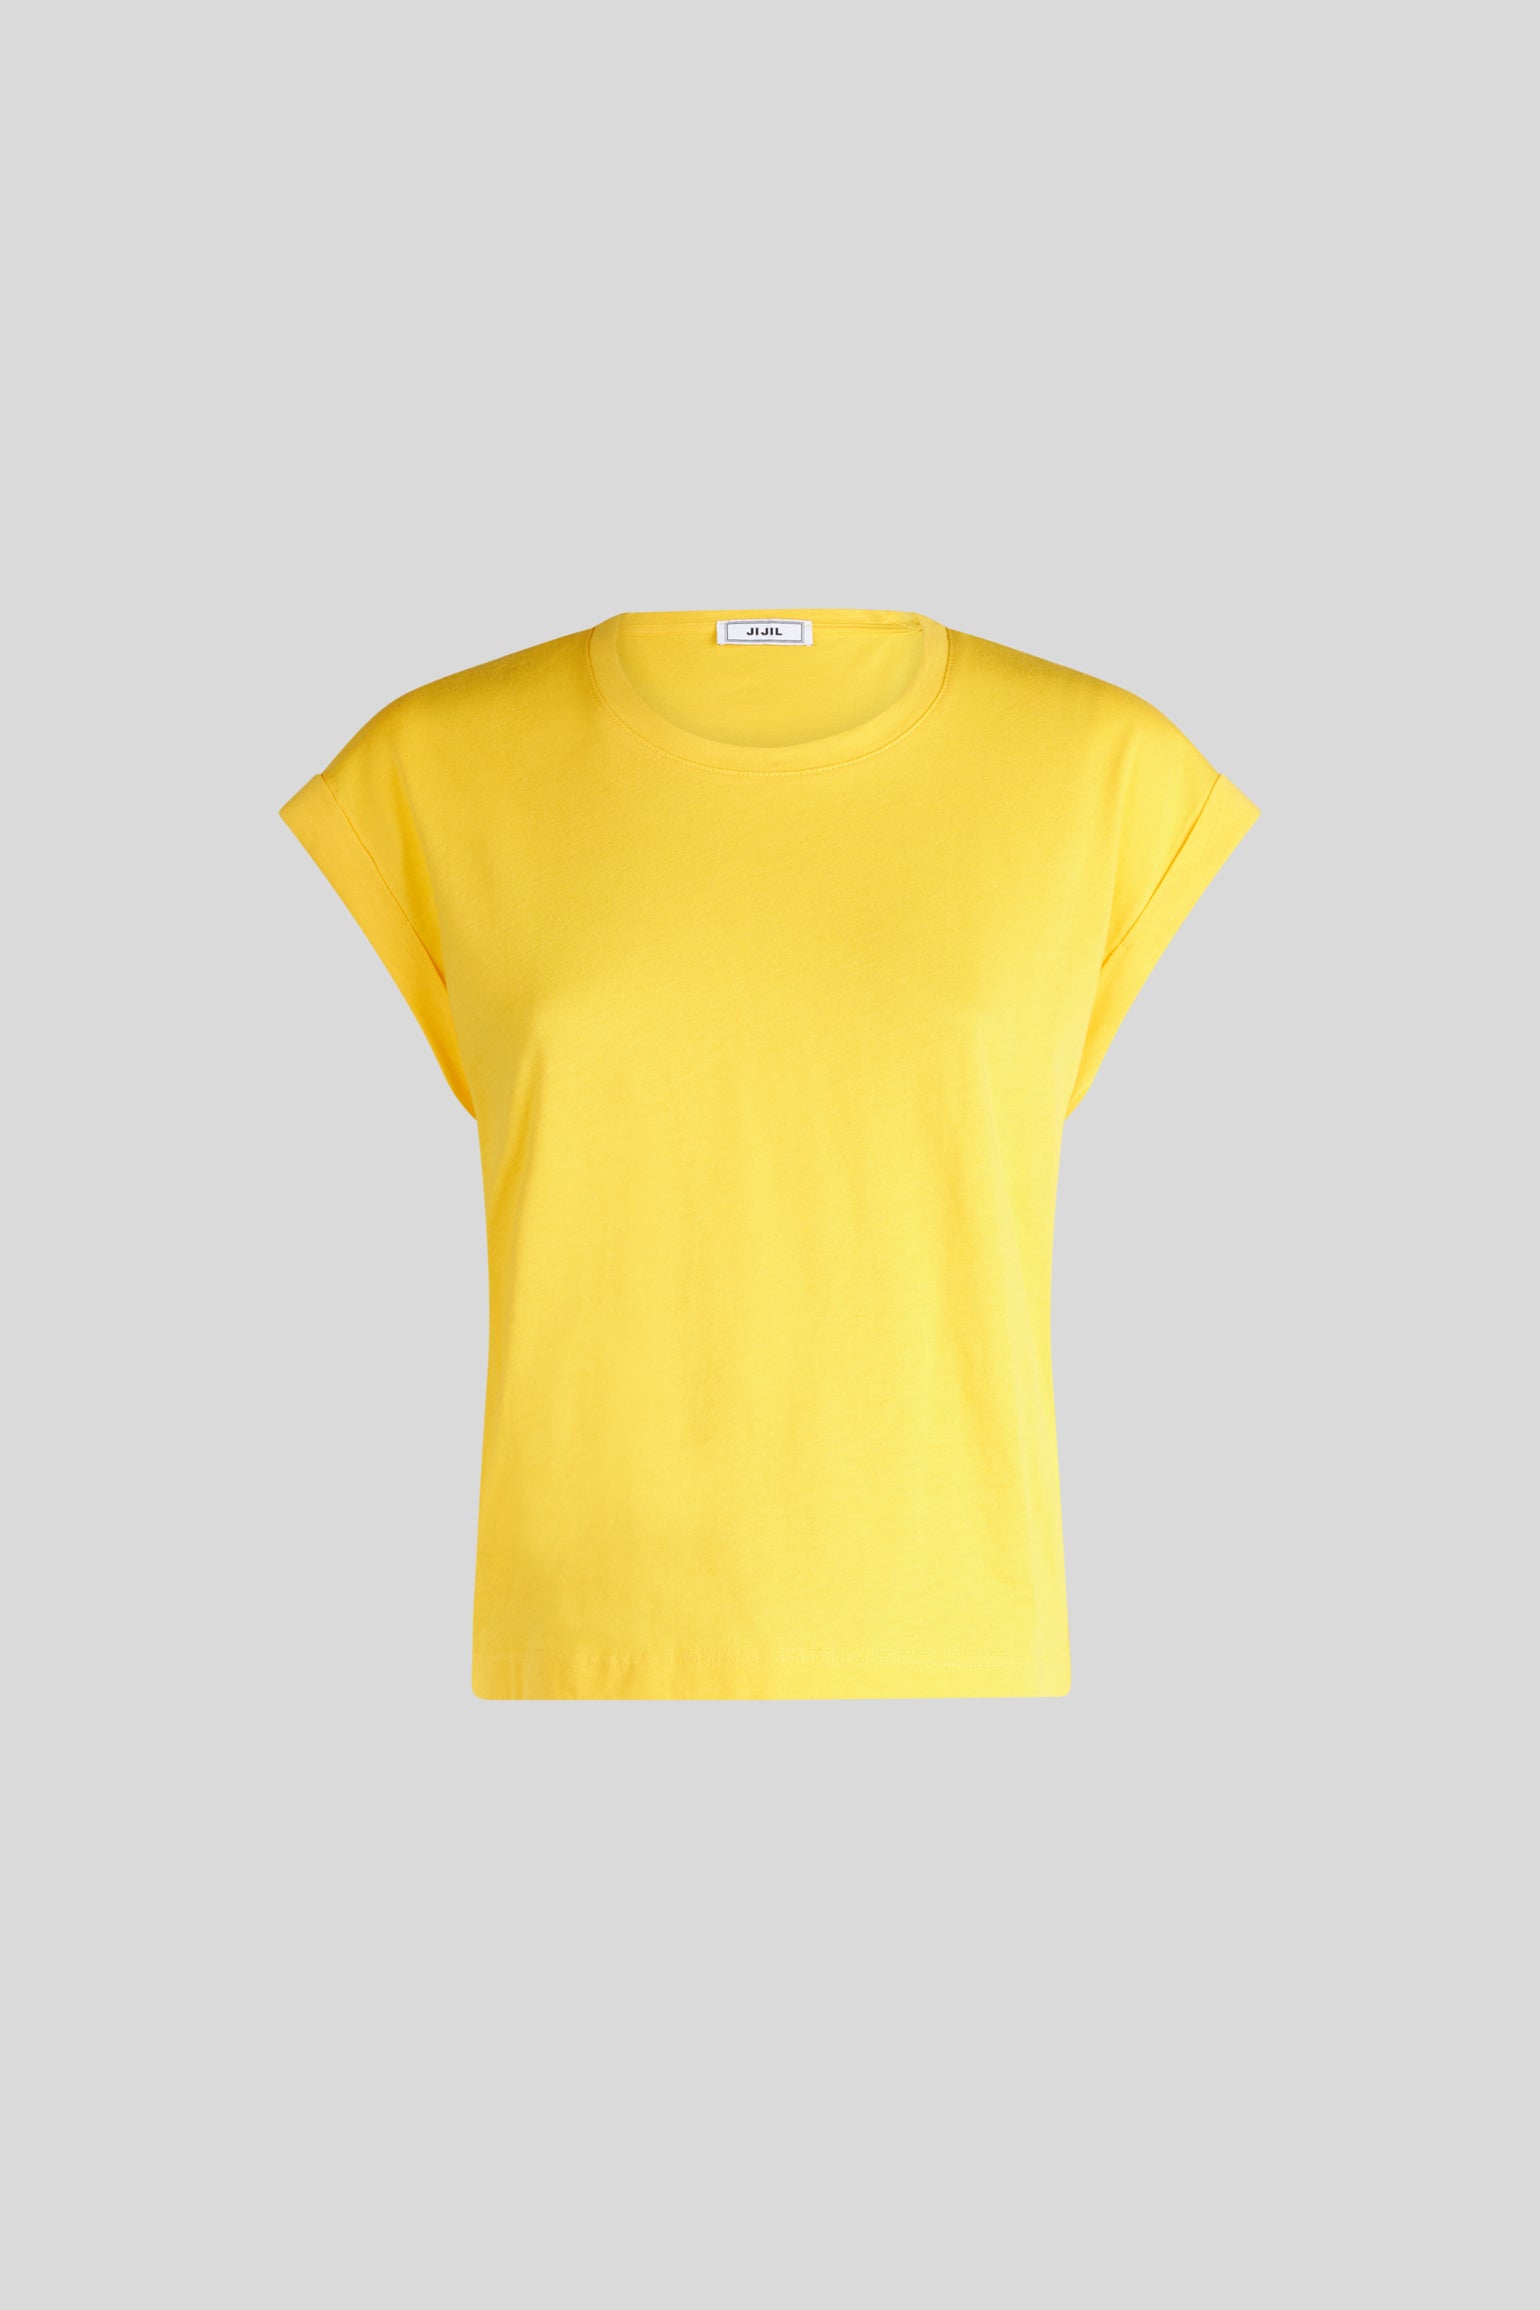 JIJIL Yellow Cotton T-shirt